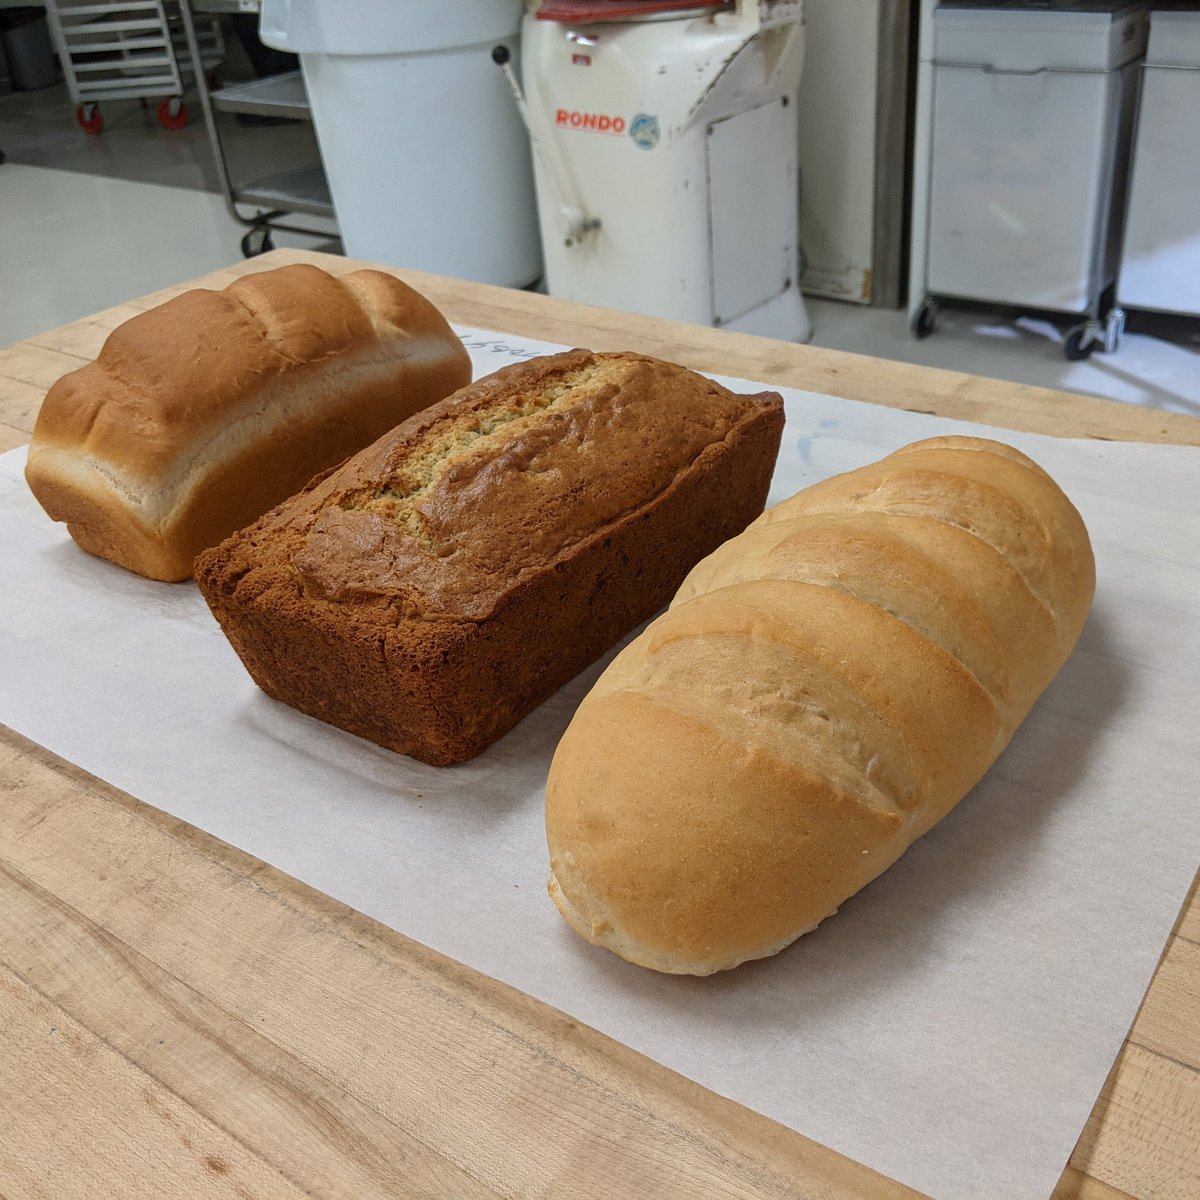 Made bread in class for midterms last week. #bananabread #Italianbread #whitebread